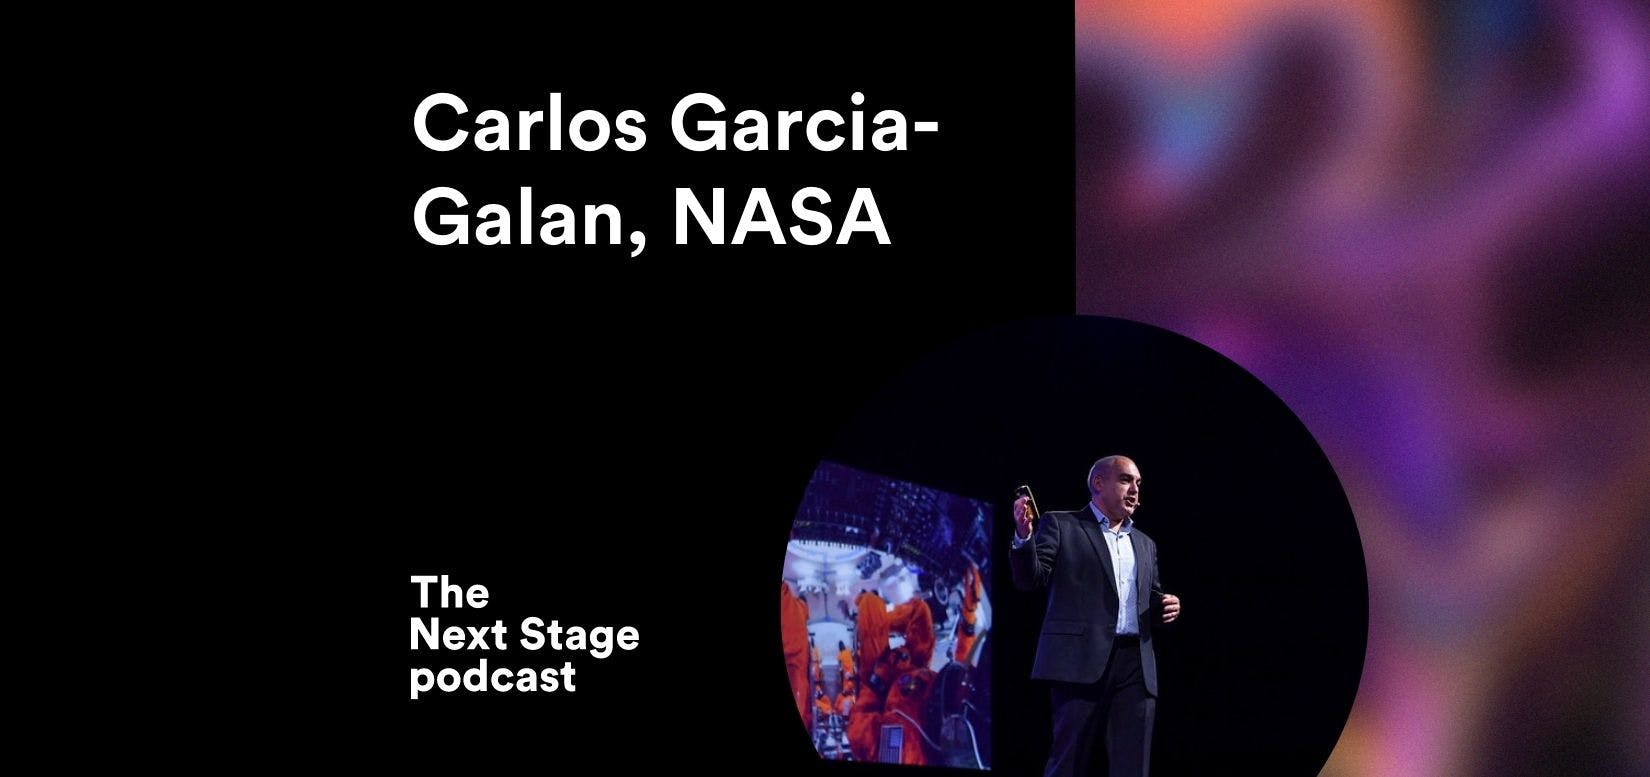 Carlos Garcia-Galan, head of European Service Module Integration at NASA